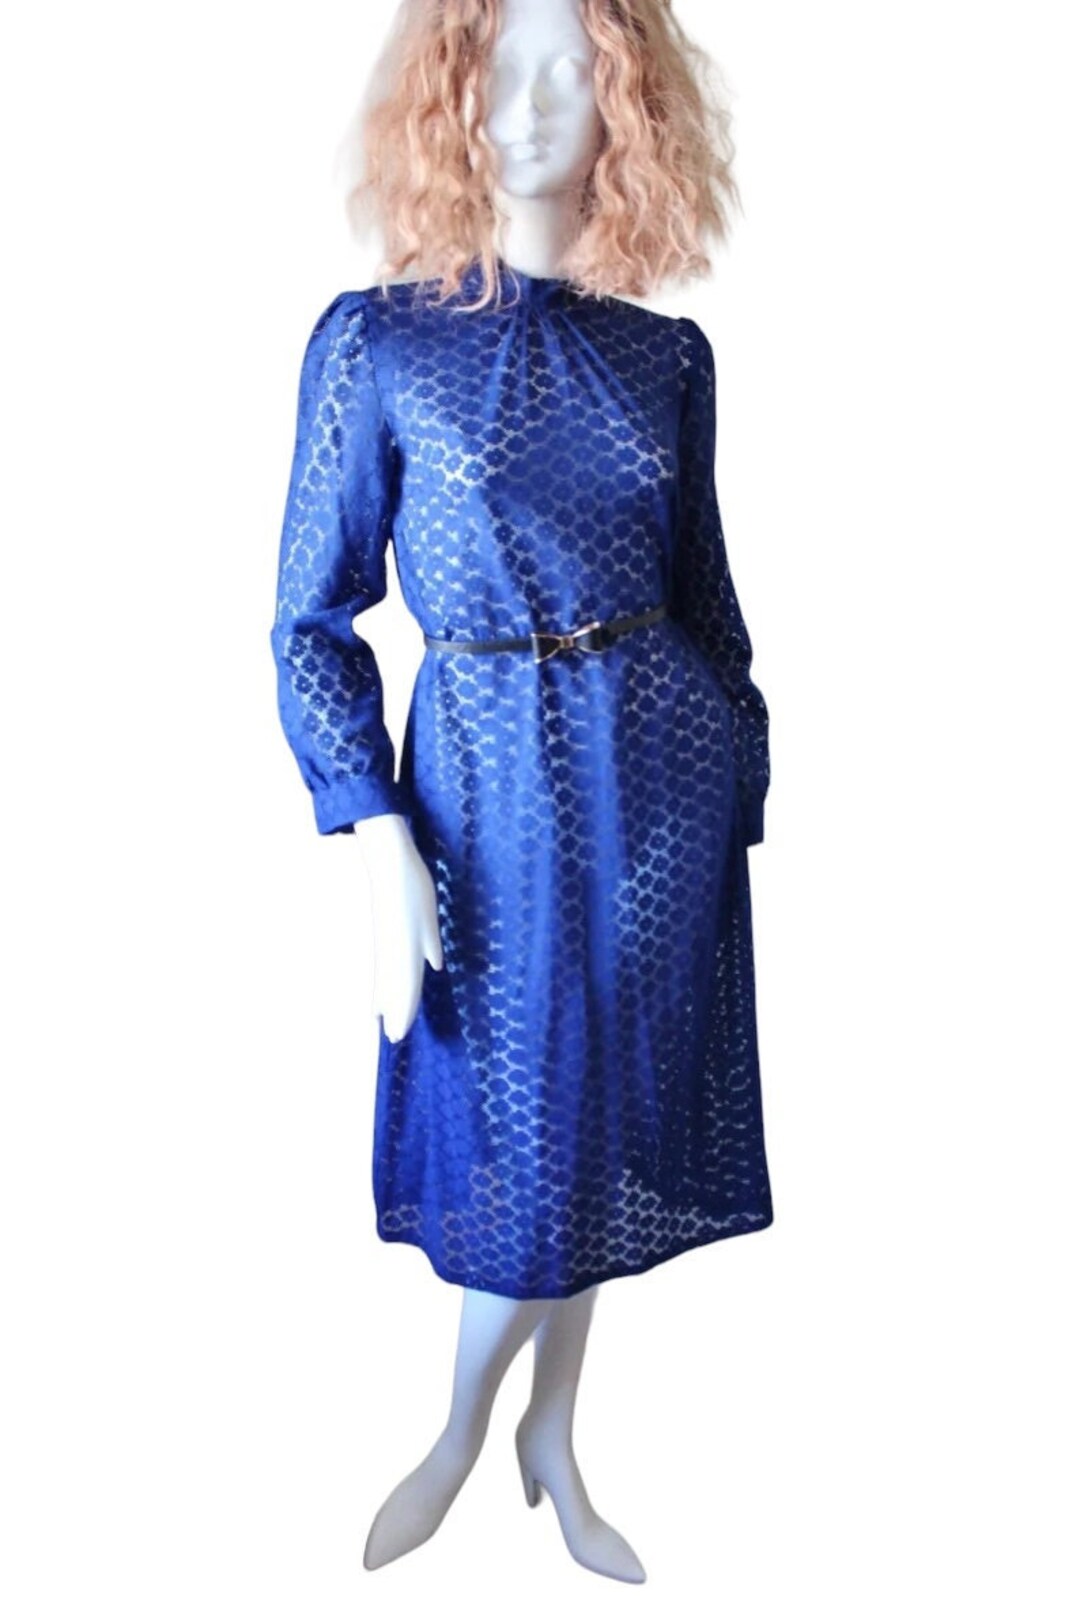 Vintage Lace Dress Blue Royal Sheer Long Sleeve 1960s - Etsy